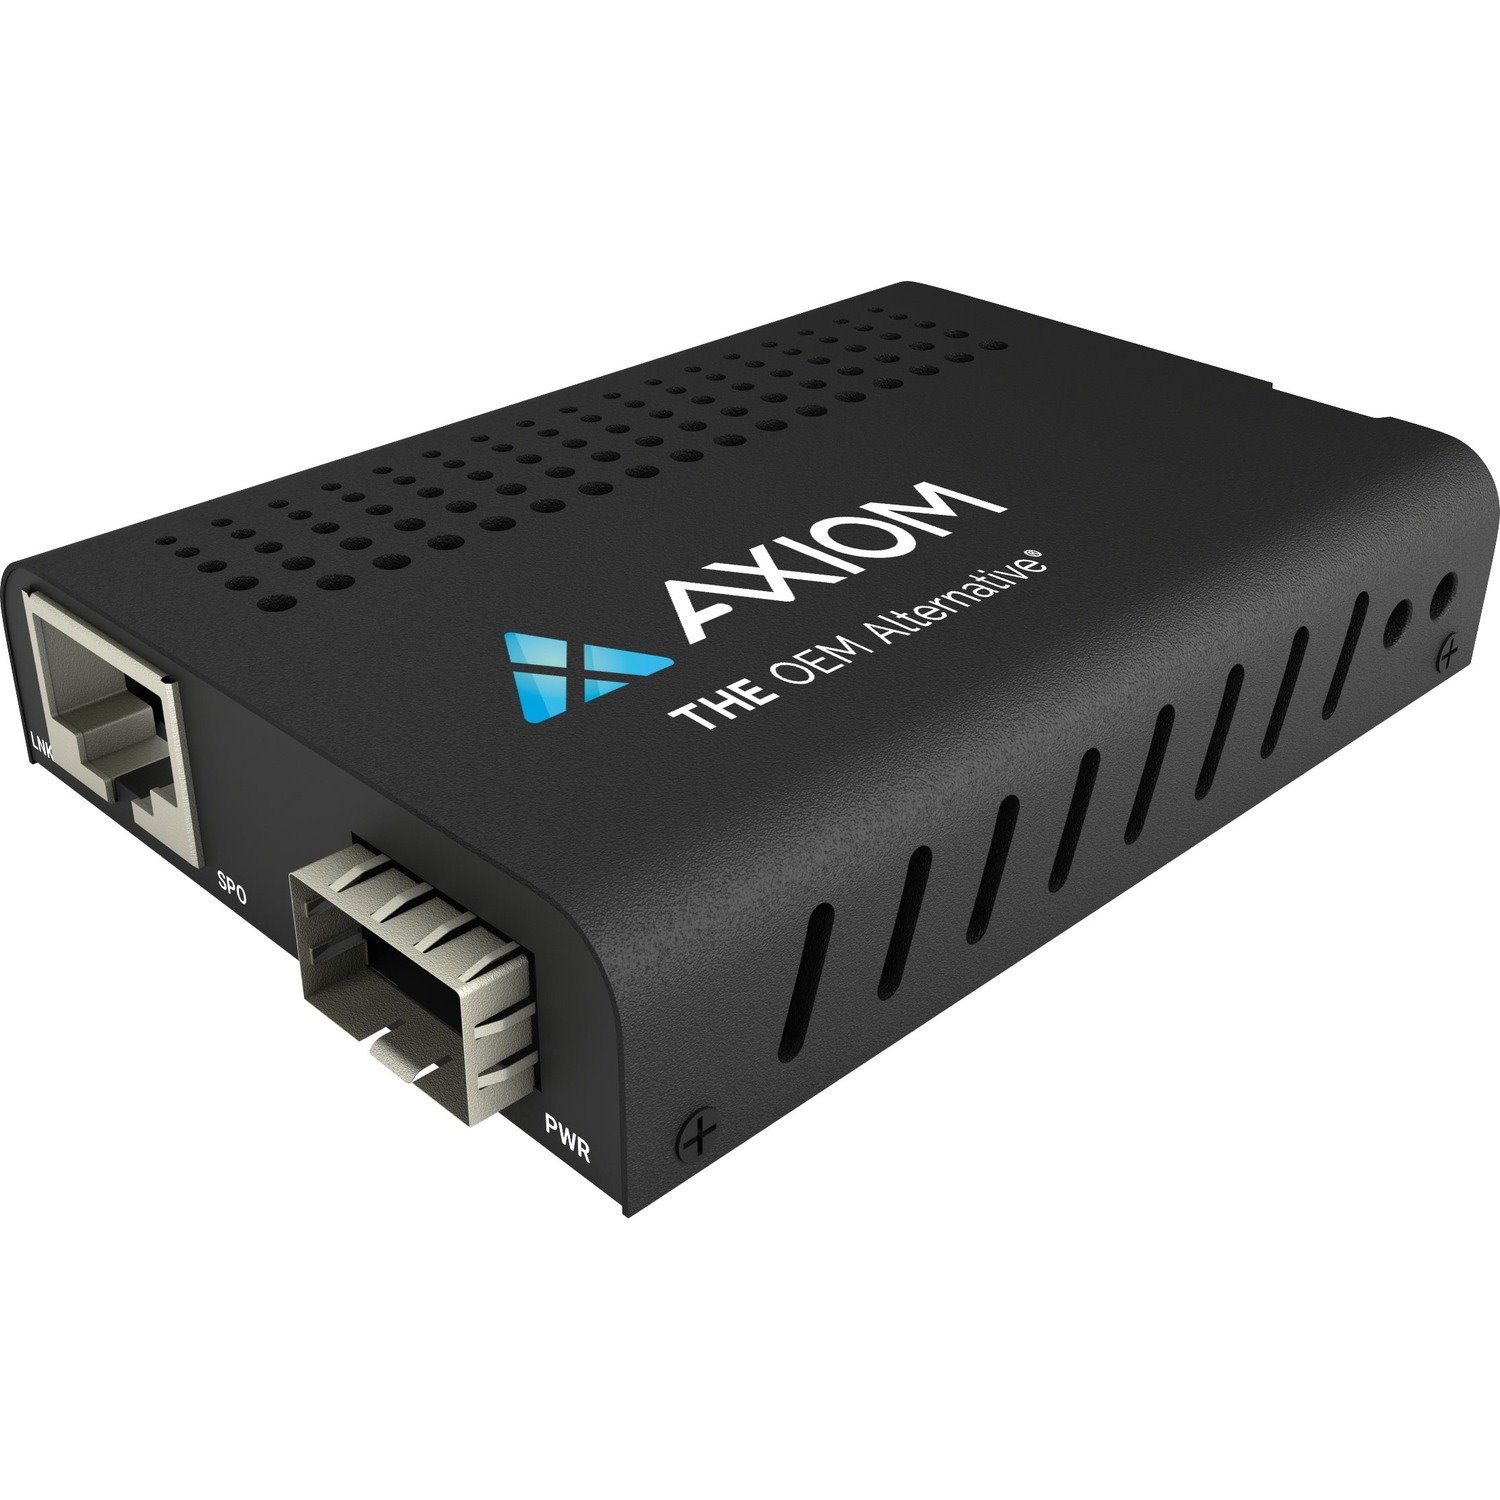 Axiom Mini 1Gbs RJ45 to SFP Fiber Media Converter - Open SFP Port